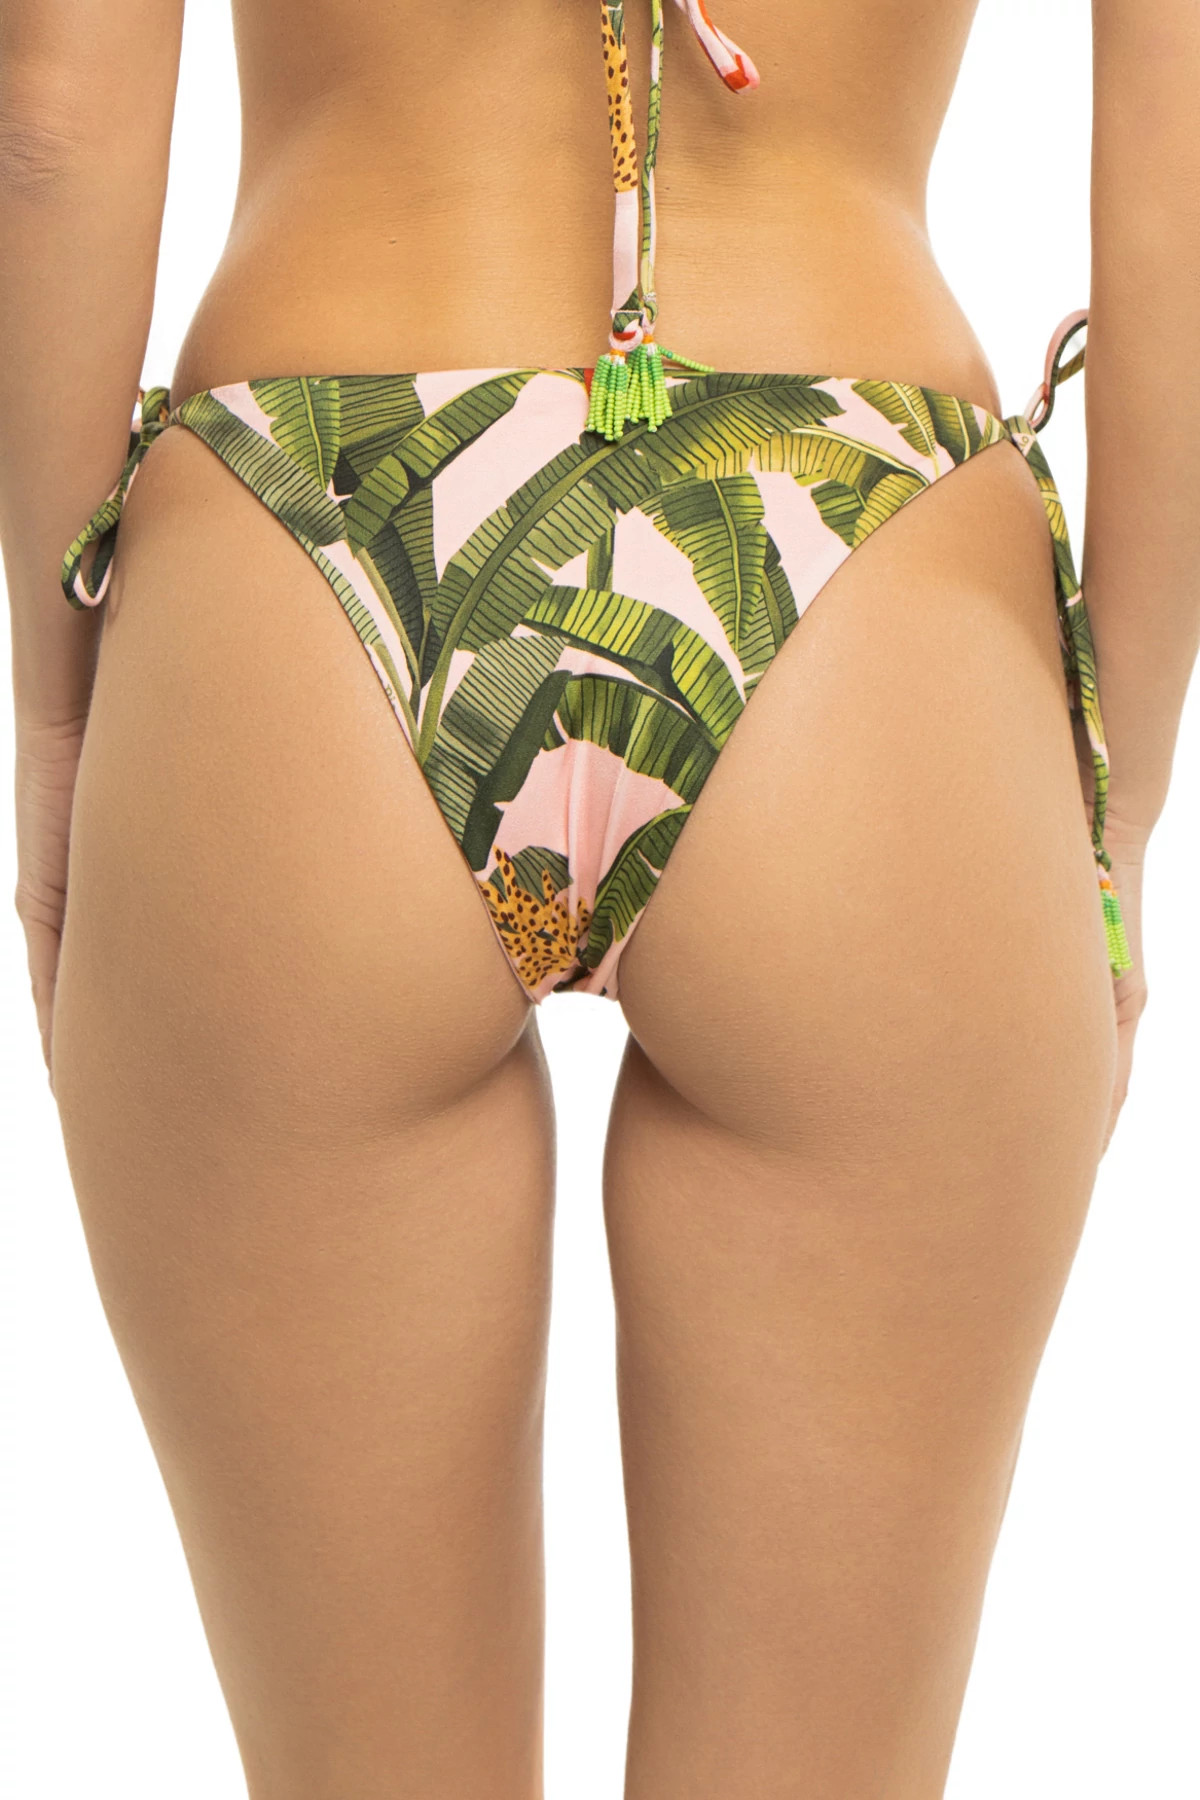 BANANA LEAVES PINK Banana Leaves Hipster Bikini Bottom image number 2